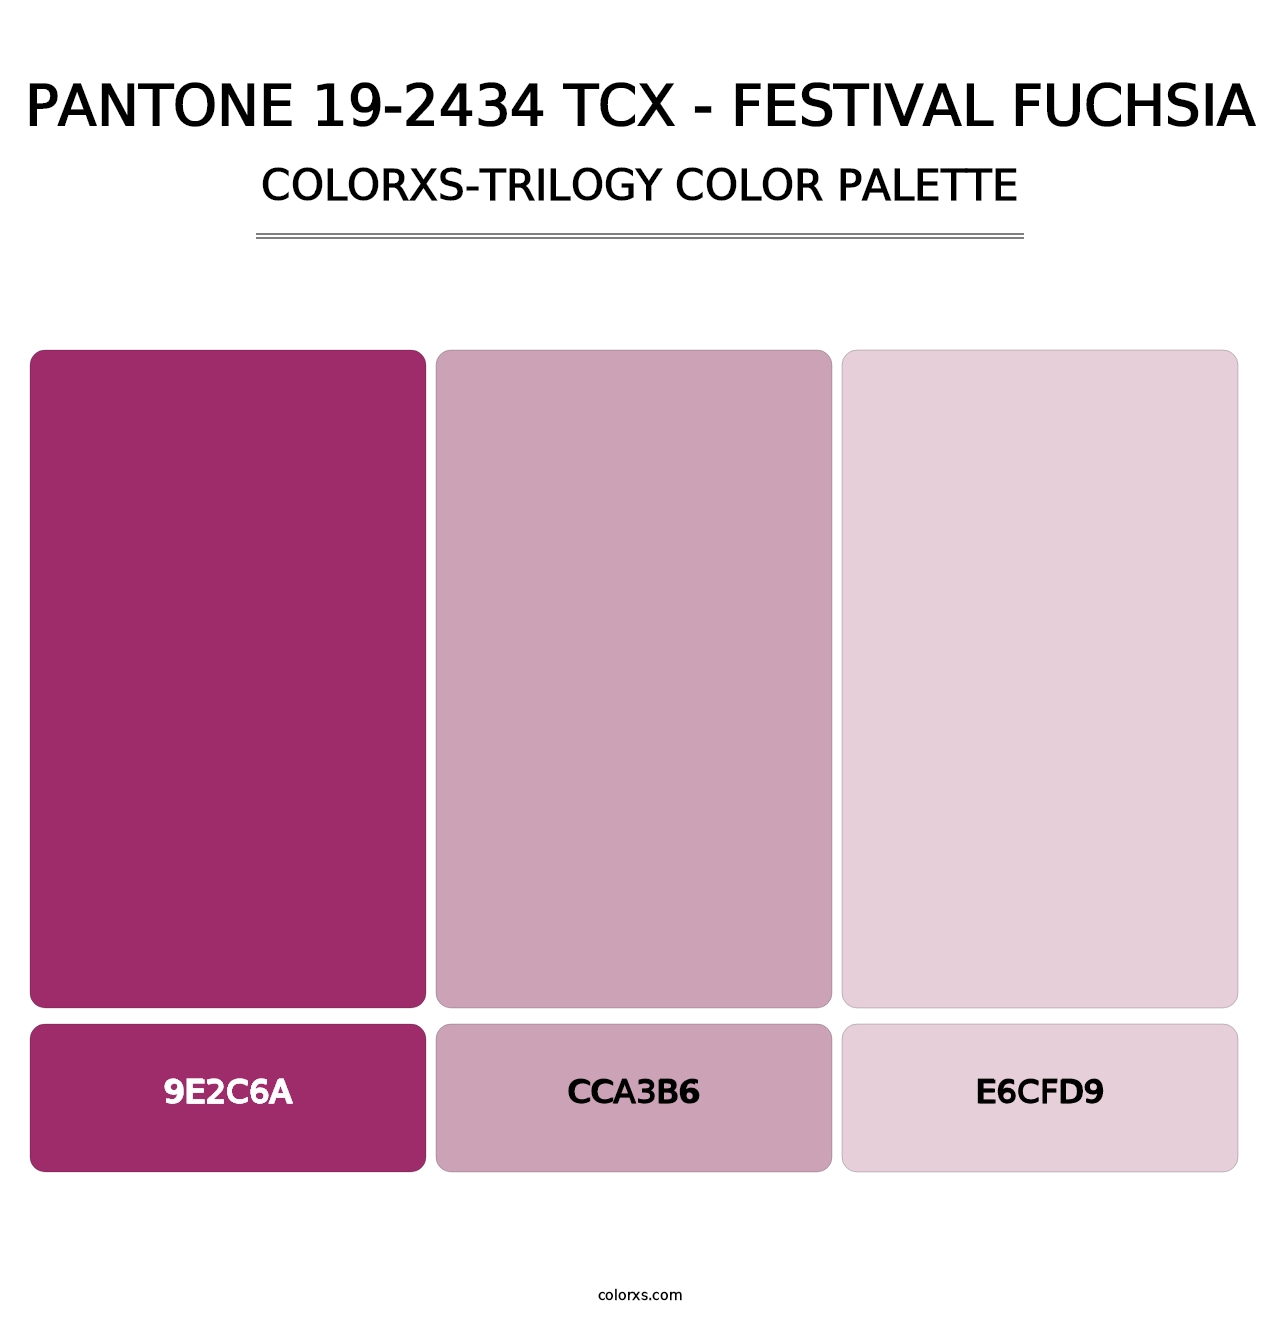 PANTONE 19-2434 TCX - Festival Fuchsia - Colorxs Trilogy Palette